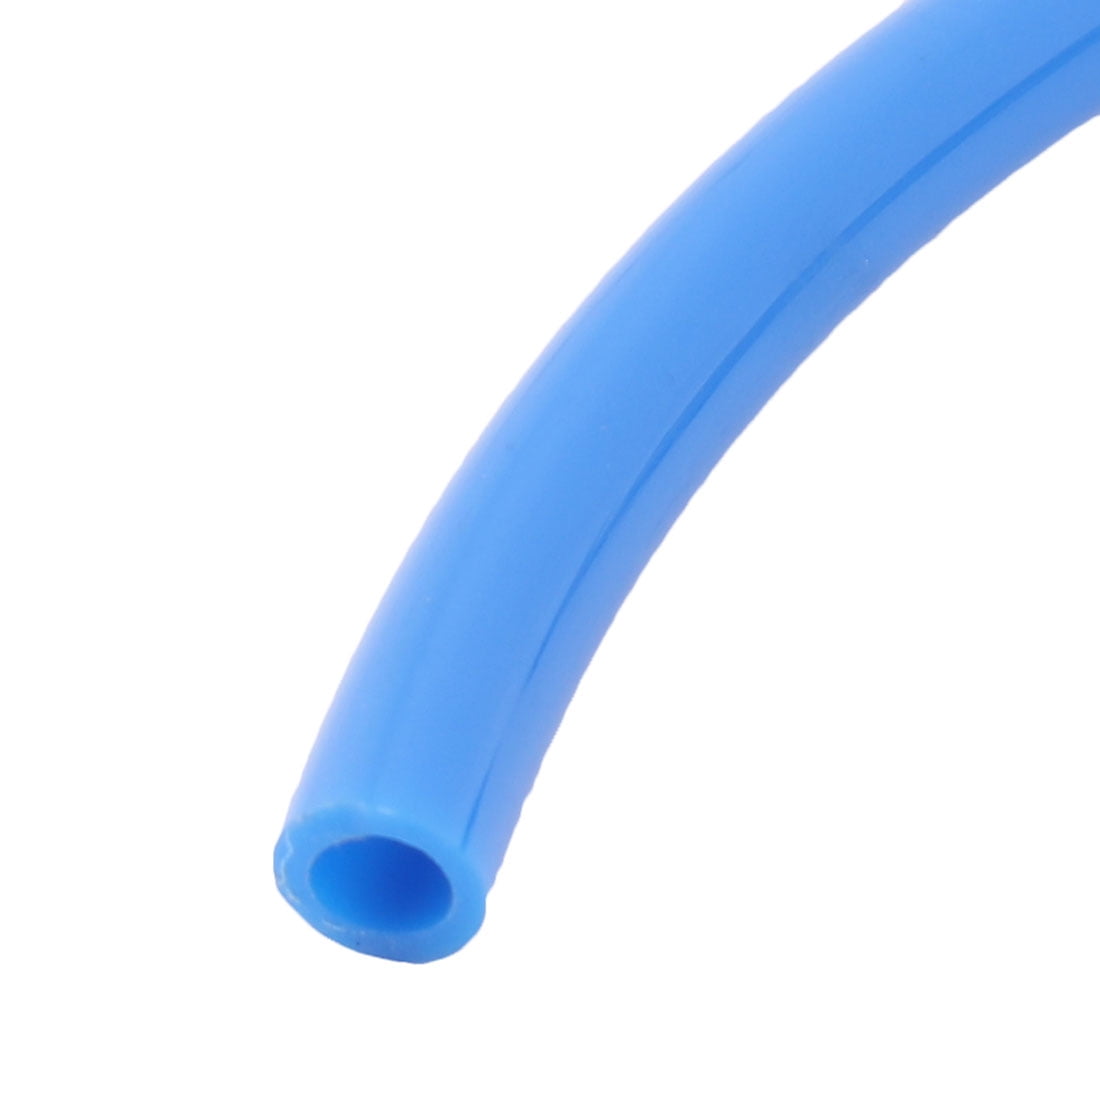 5 x 8mm Fuel Gas Air flex Polyurethane PU Pneumatic Tube Hose Pipe-BLUE 